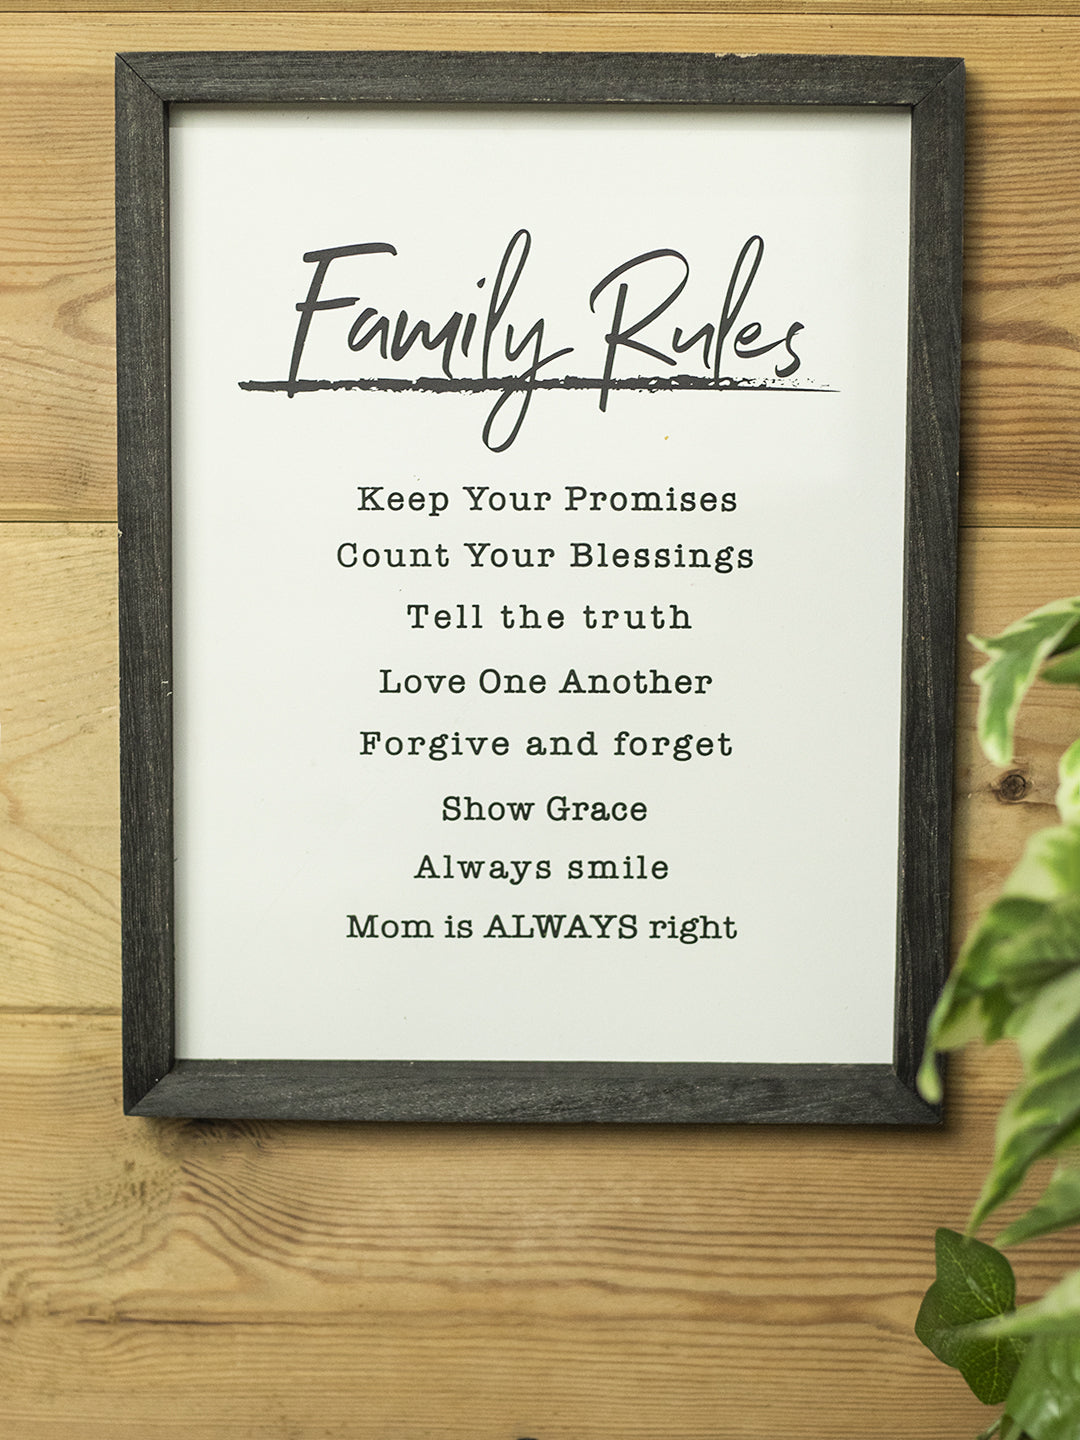 VON CASA Decorative Wall Plaques - family rules